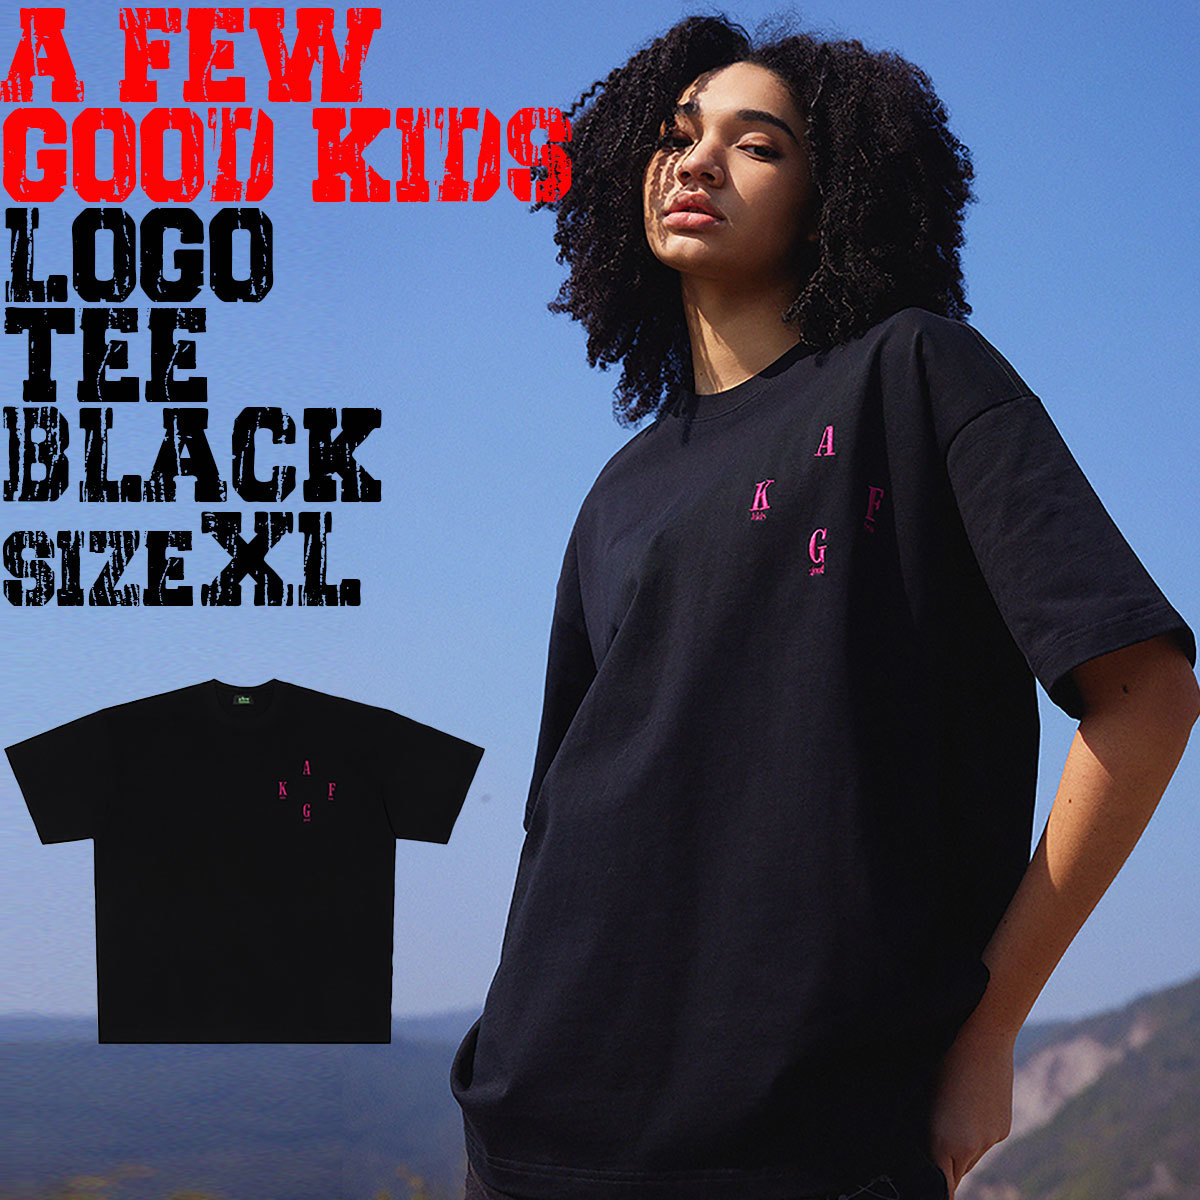 【 A FEW GOOD KIDS 】 AFGK 正規品 男女兼用 ユニセックス ビッグサイズ ストリート系 ロゴ 刺繍 Tシャツ LOGO TEE ブラック L